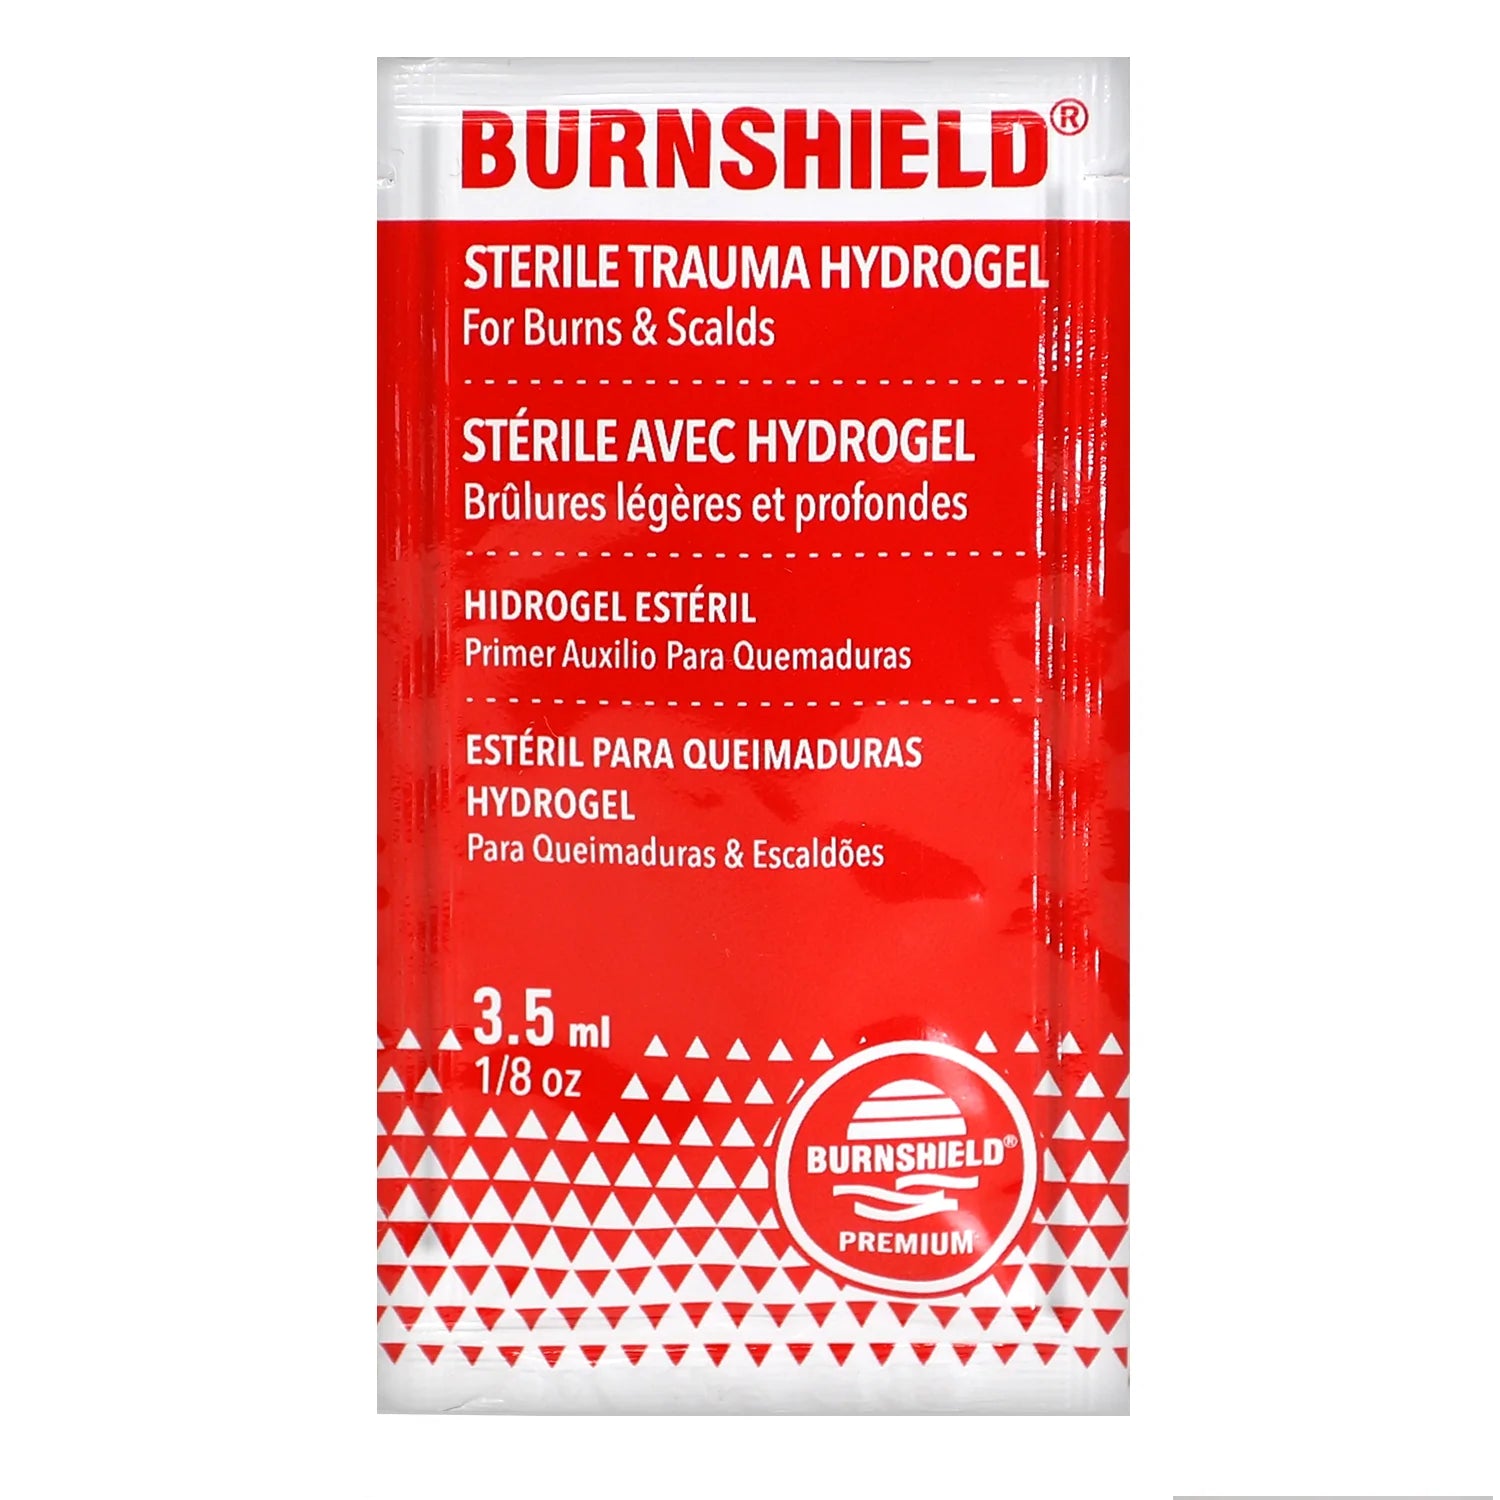 Burnshield Burn Gel Packet, 1/8 oz (3.5ml)